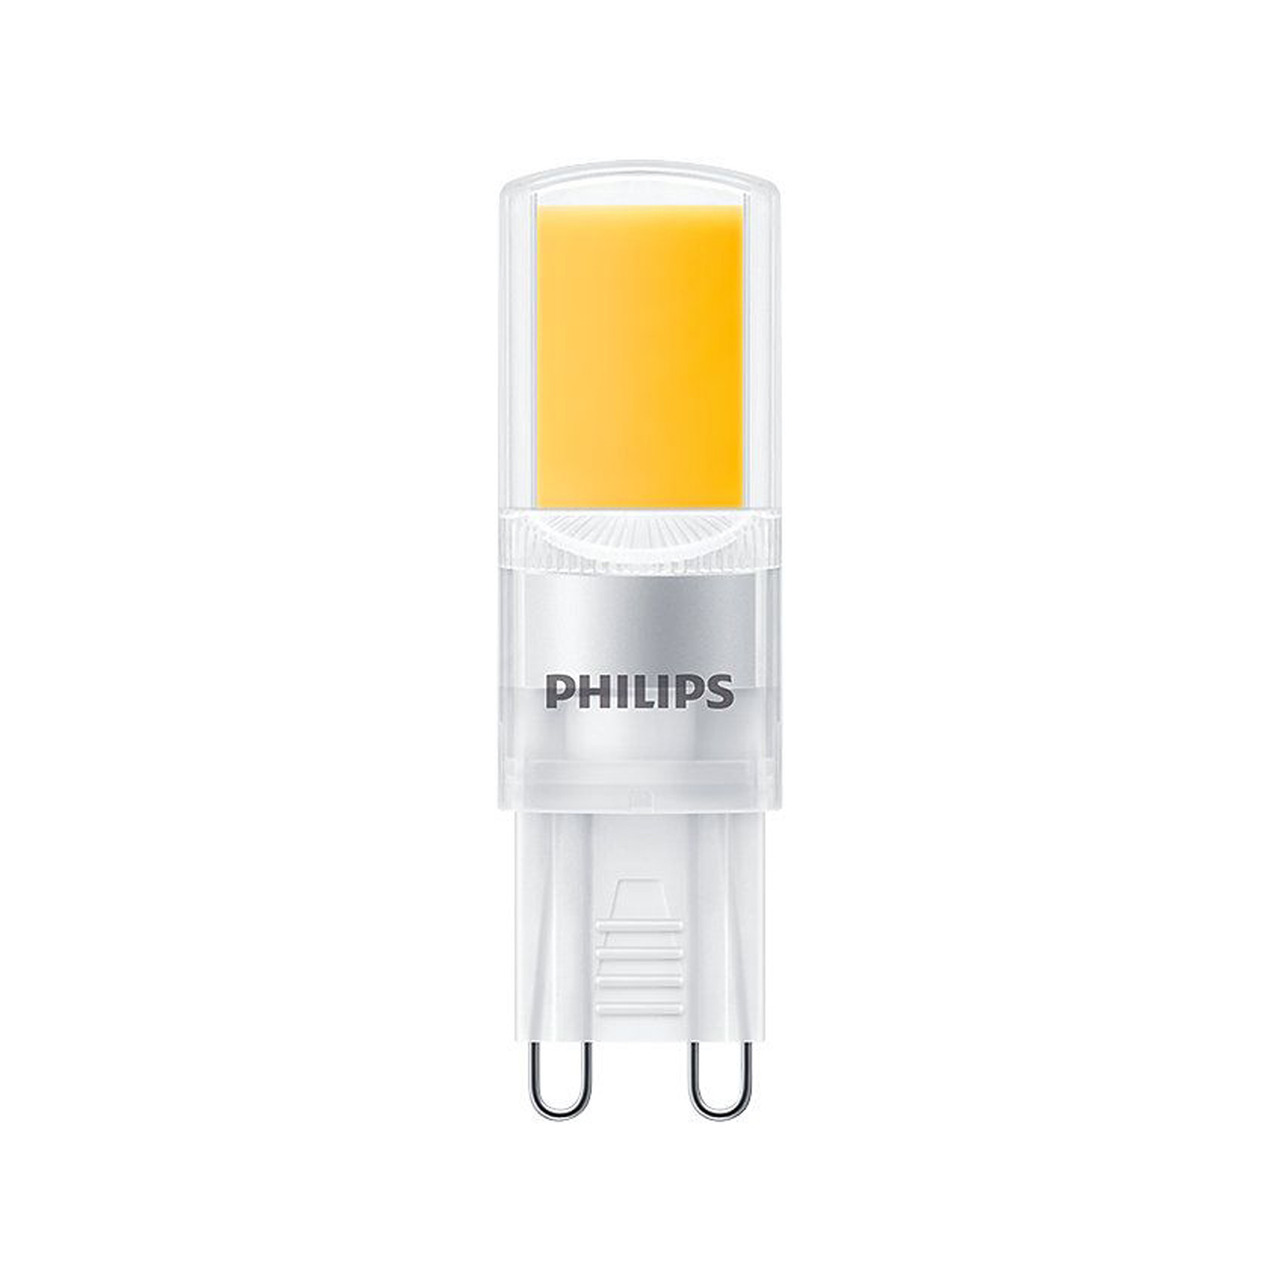 Philips 3-2-W-G9-LED-Lampe CorePro LEDcapsule- Stiftsockellampe- 400 lm- warmweiss- 2700 K unter Beleuchtung